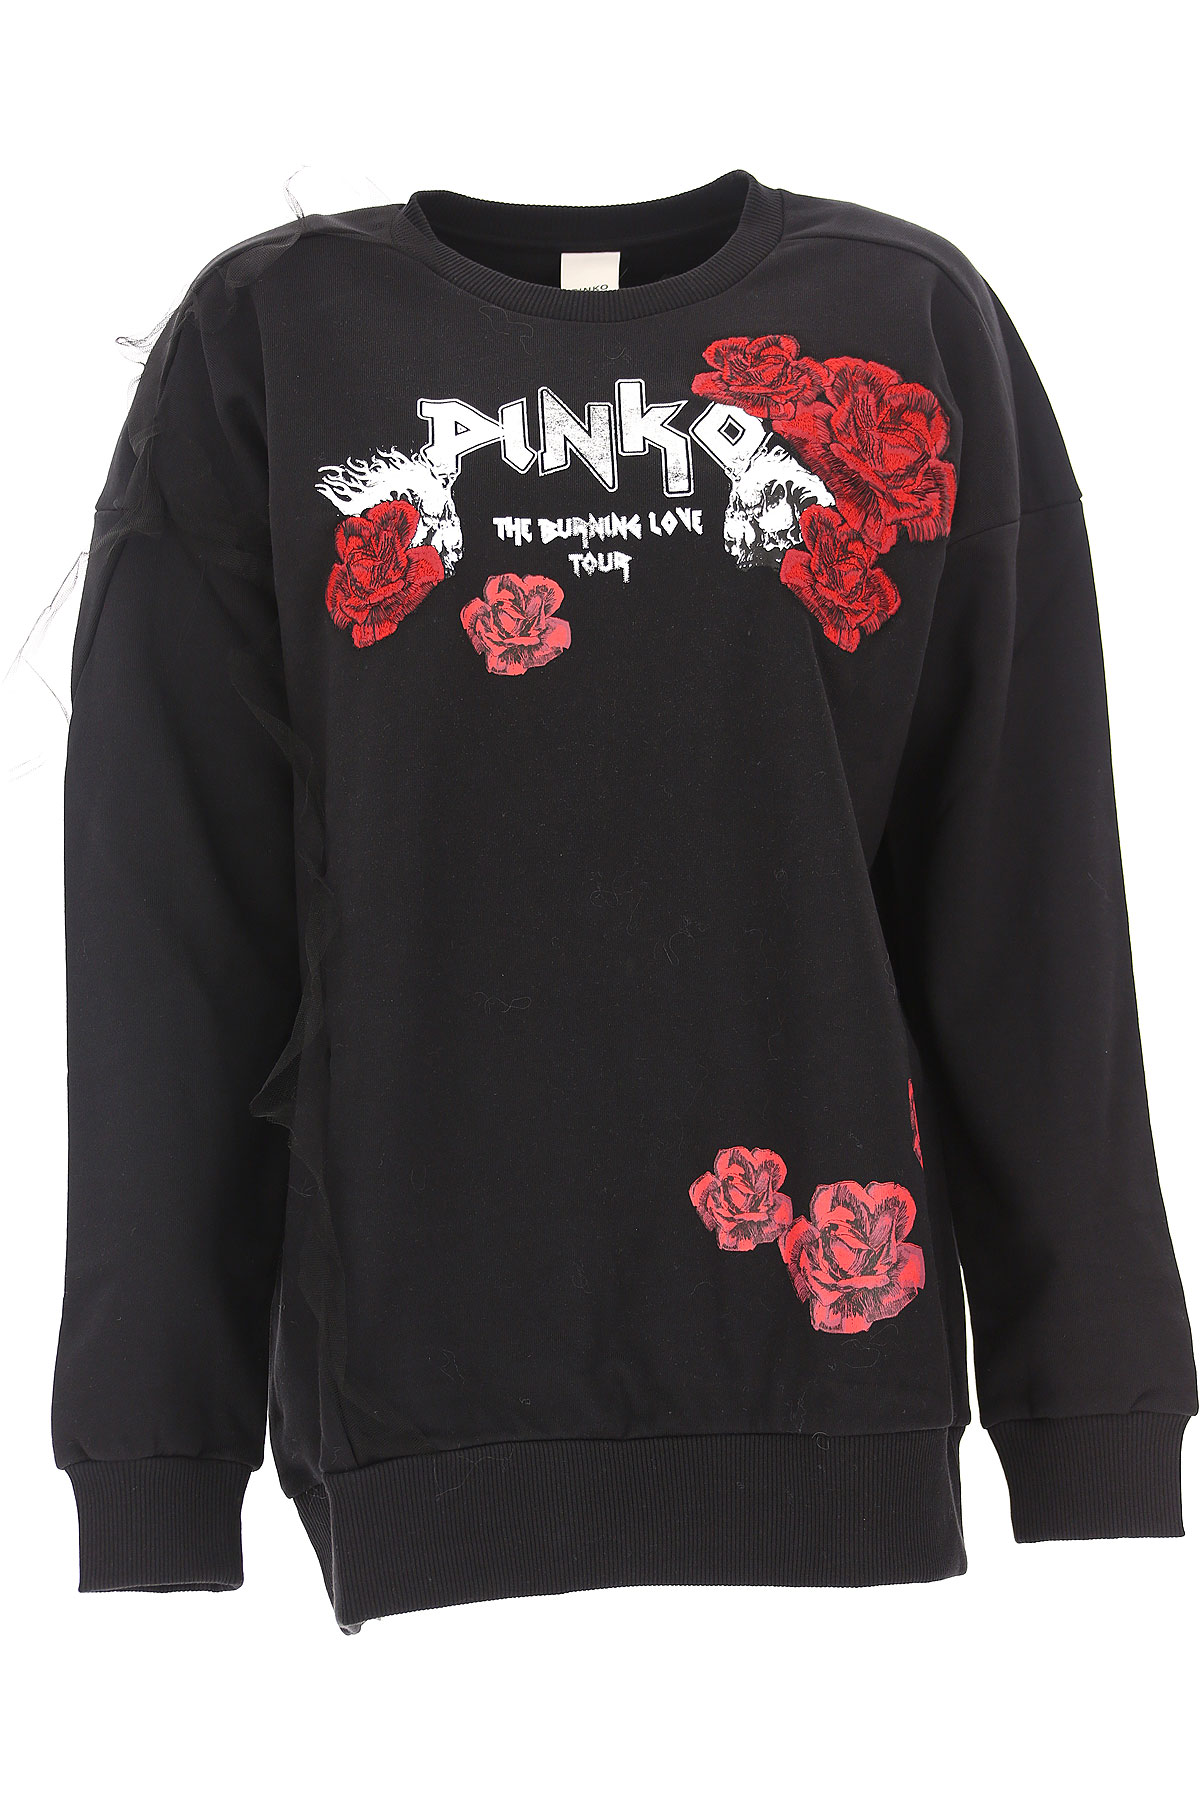 Pinko Sweatshirt for Women , Noir, Coton, 2017, 38 40 42 44